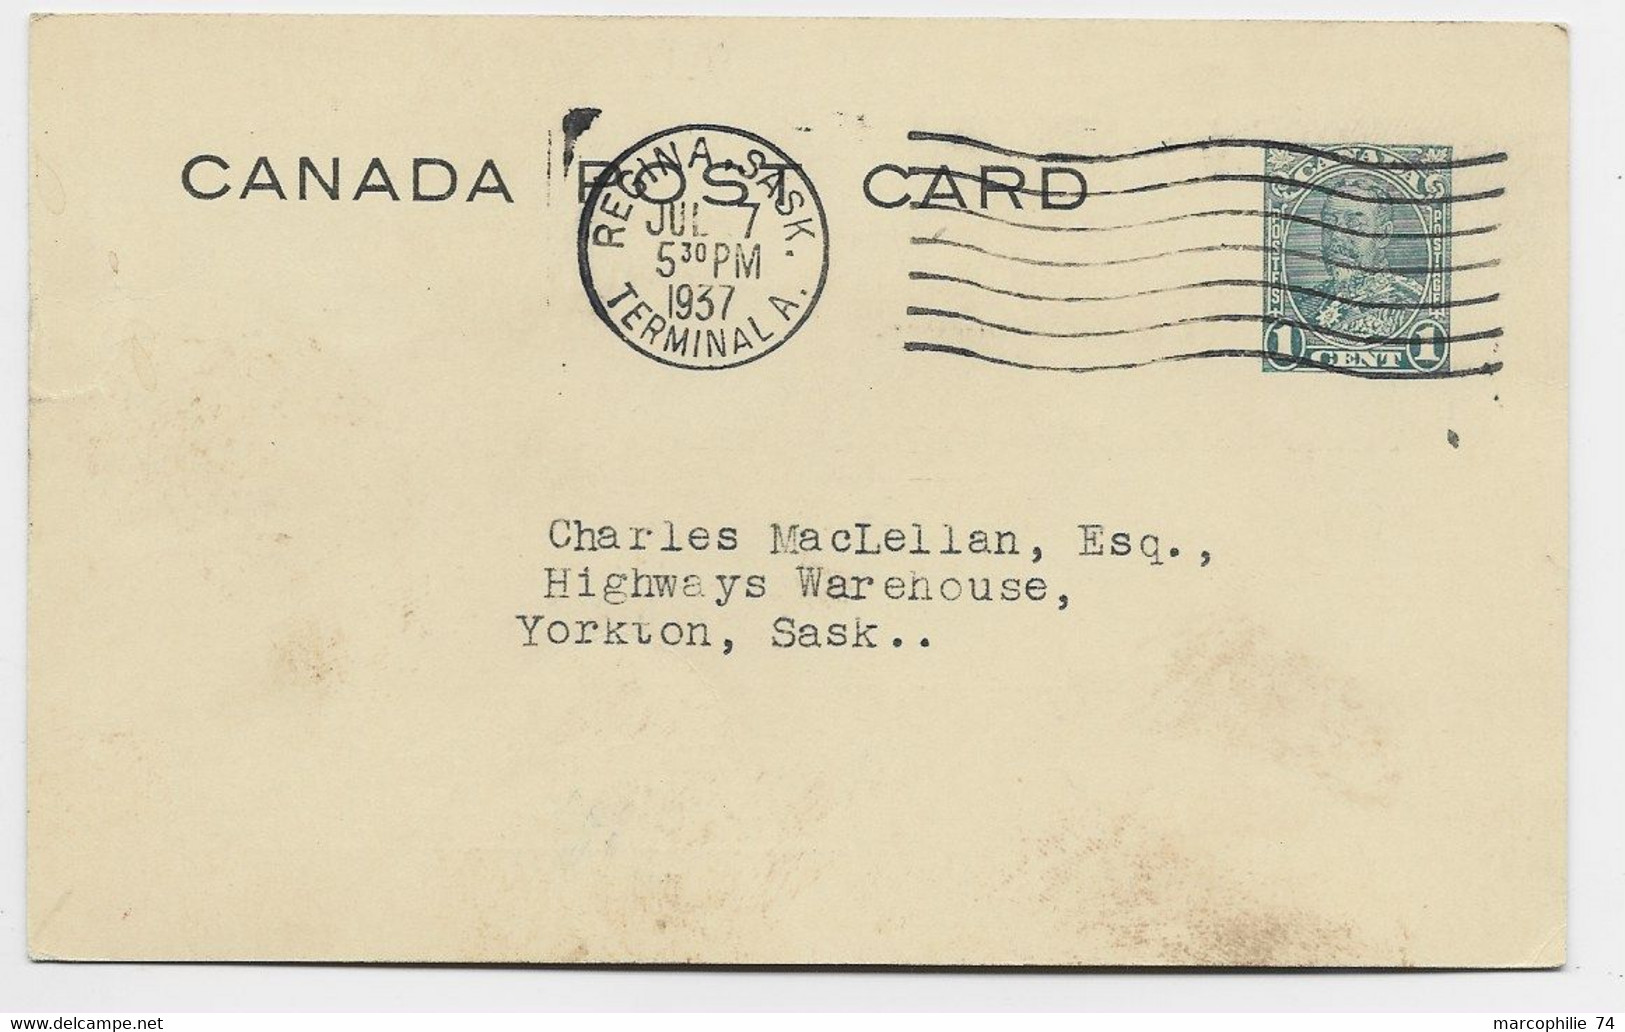 CANADA ENTIER 1 CENT POST CARD REGINA SASK JUL 7 1937 REPIQUAGE MOTOR LICENSE OFFICE - 1903-1954 Reyes